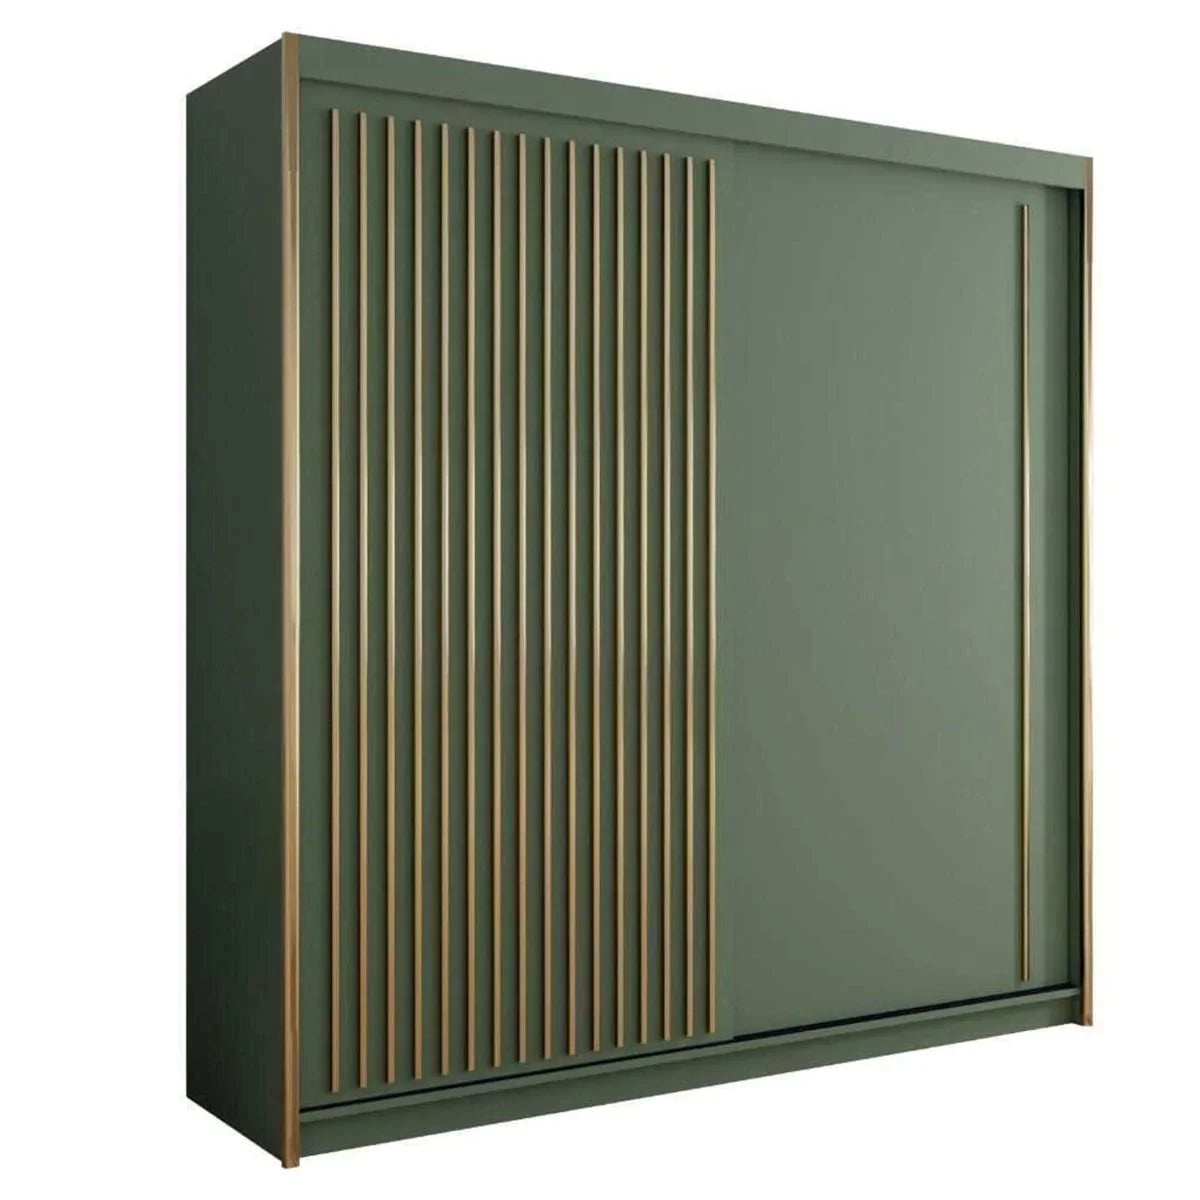 Kesteven Gold Strip Design Green Sliding Door Wardrobe - 203cm